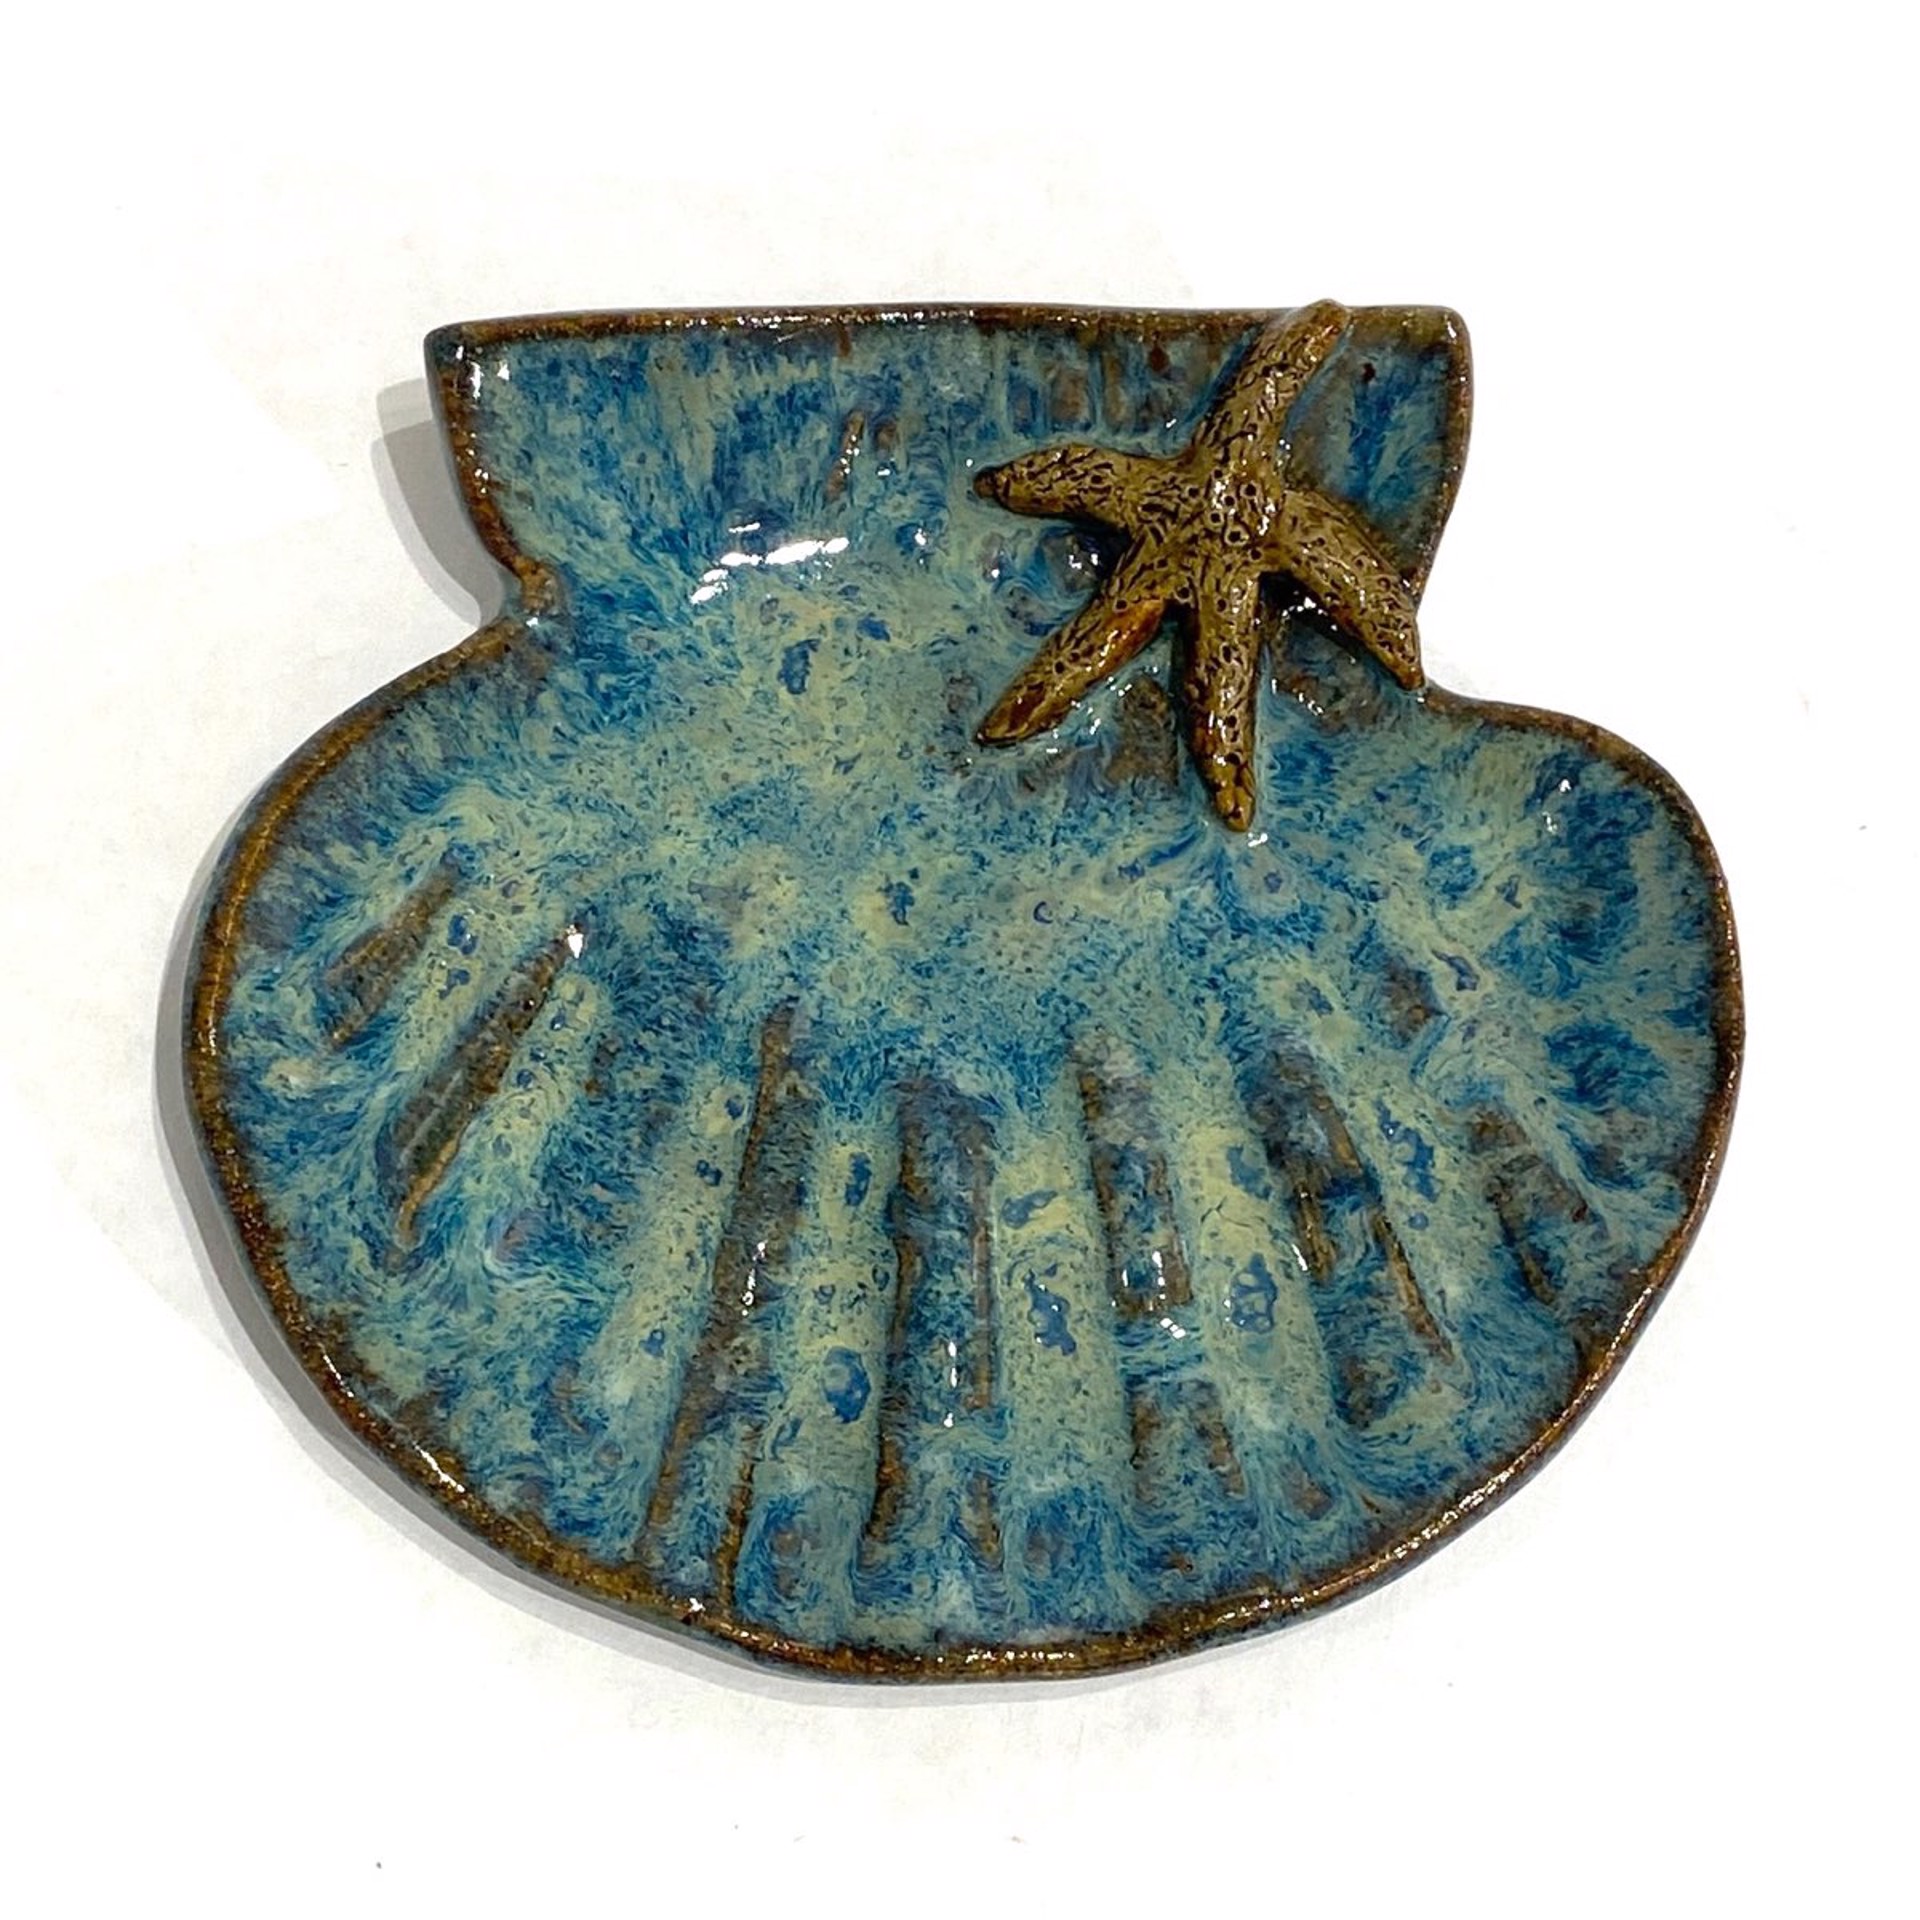 LG23-1025 Shell Dish with Starfish (Blue Glaze) by Jim & Steffi Logan